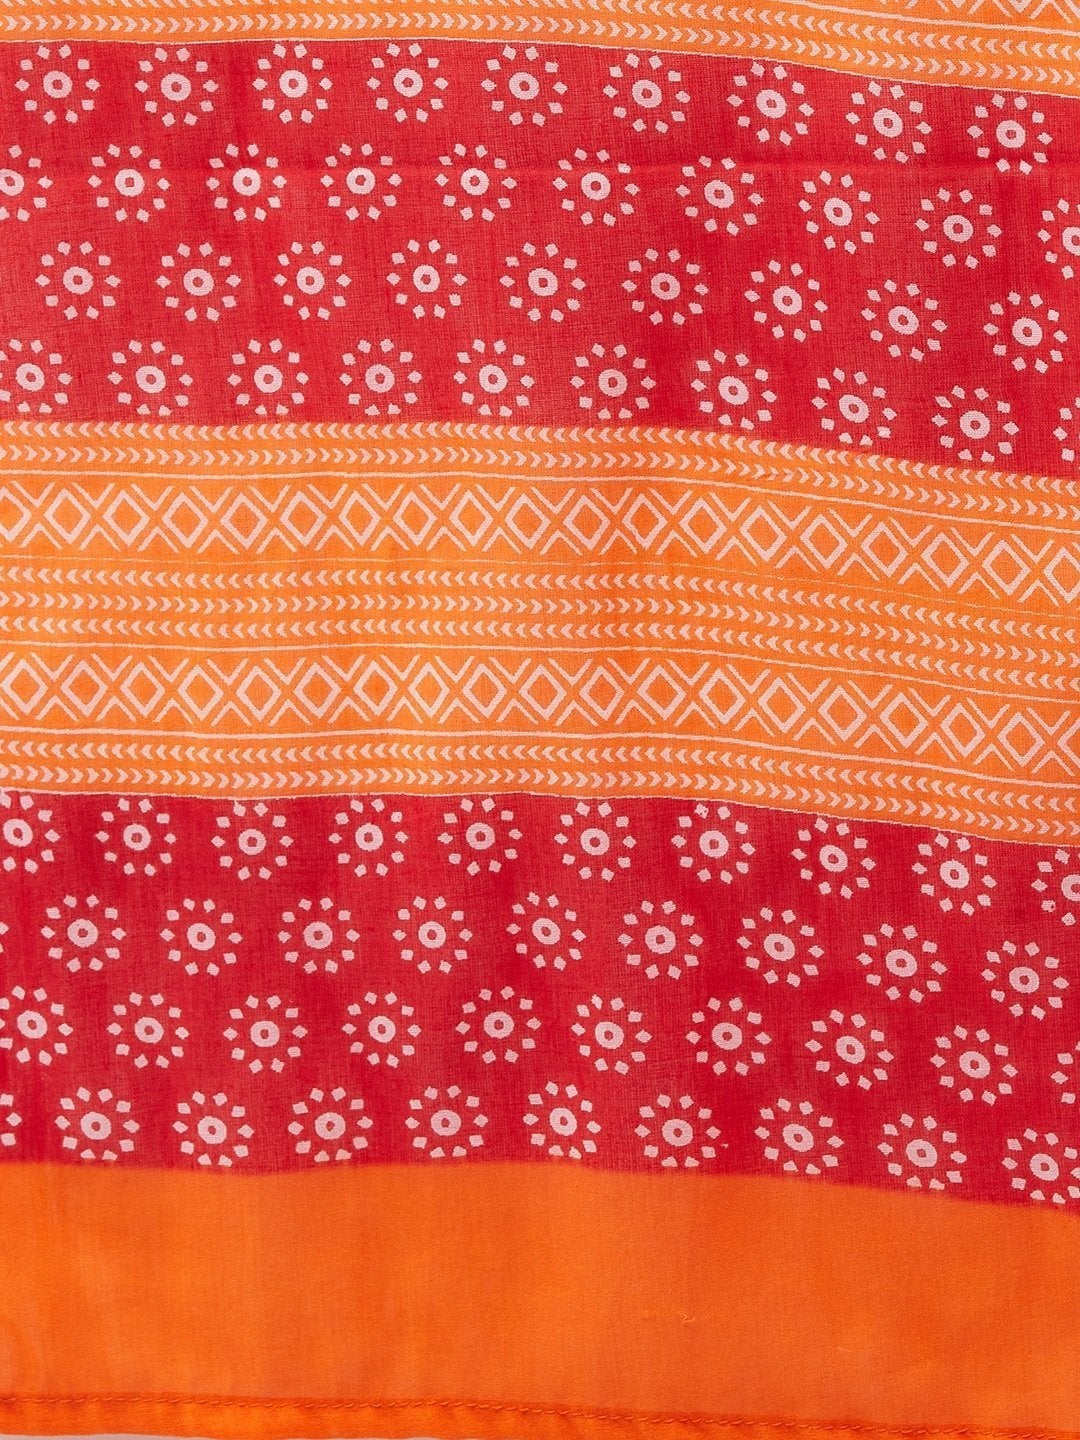 Women's Red -Orange Cotton Dupattas - InWeave